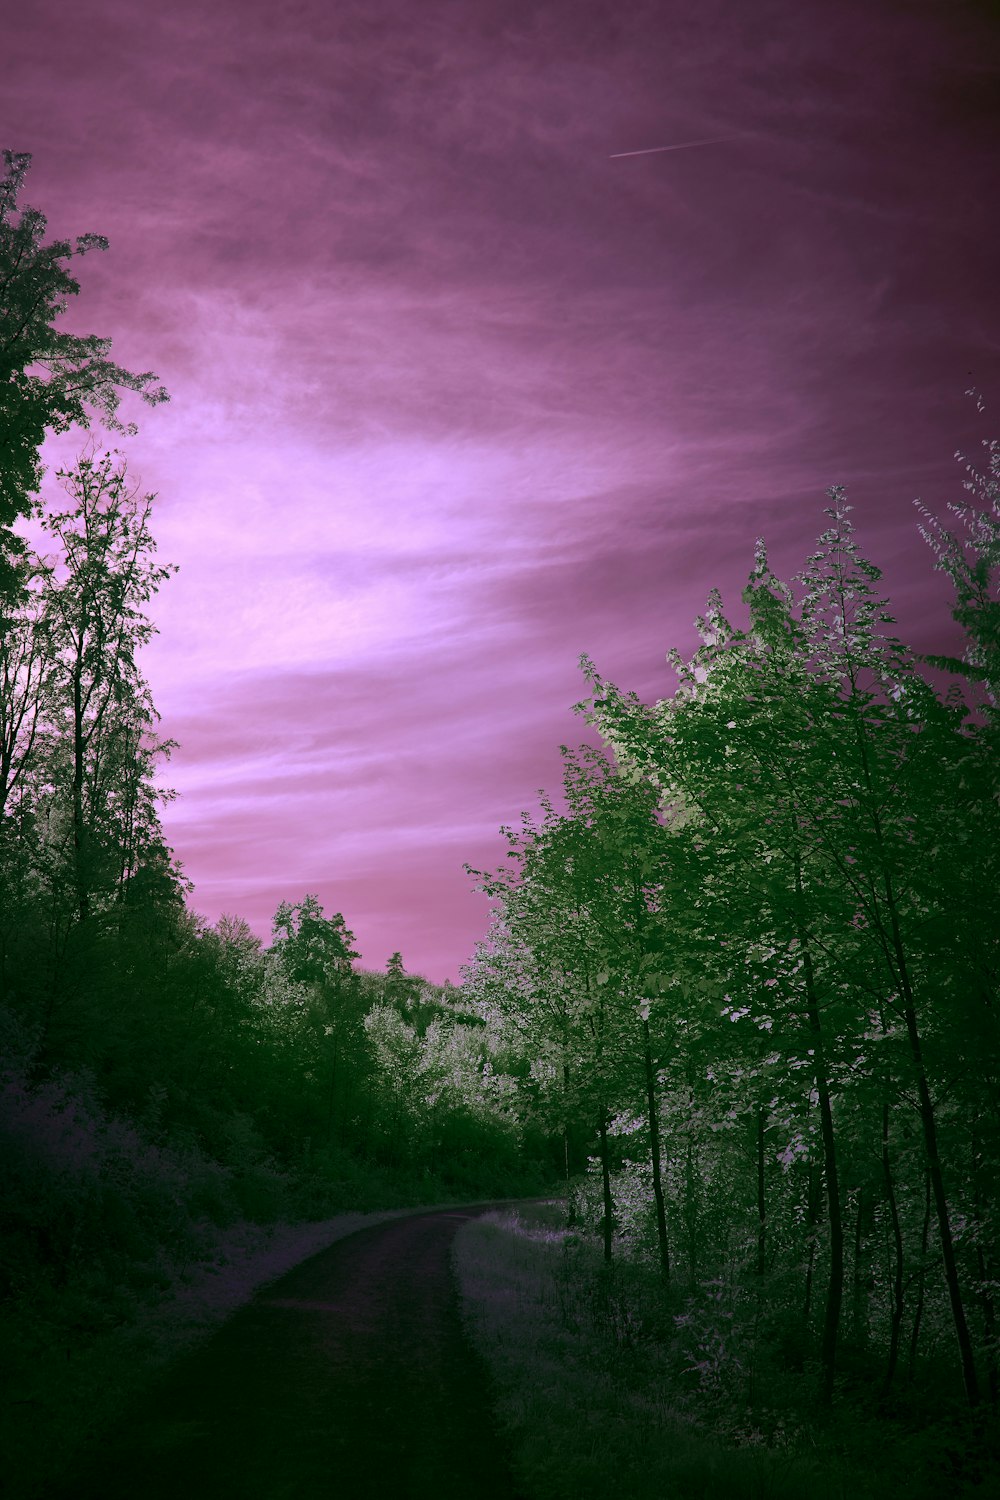 green trees under purple sky